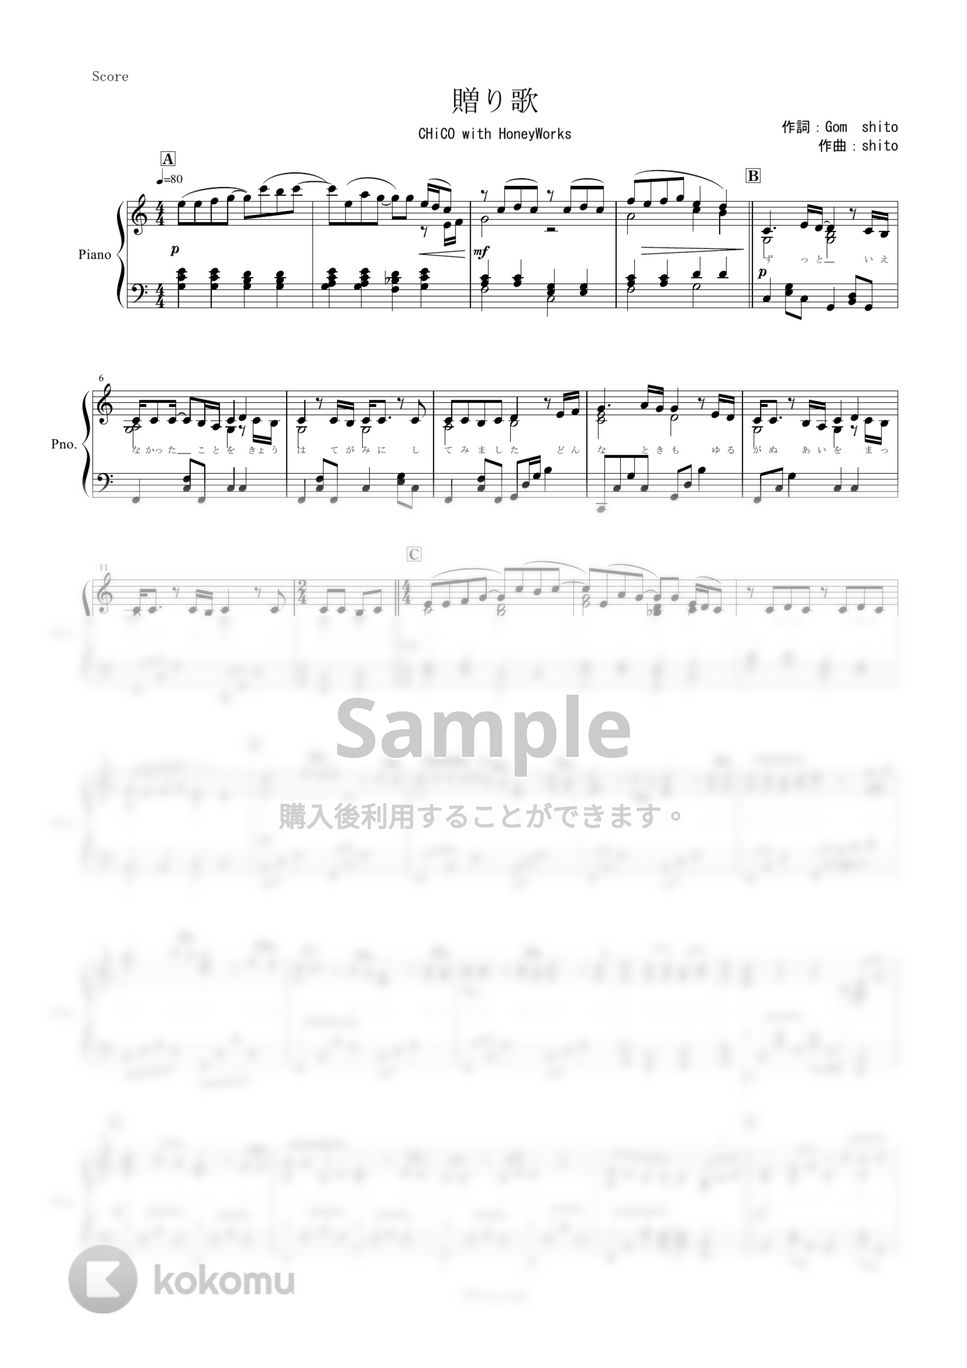 CHiCO with HoneyWorks - 贈り歌 (ピアノ楽譜/全４ページ) by yoshi